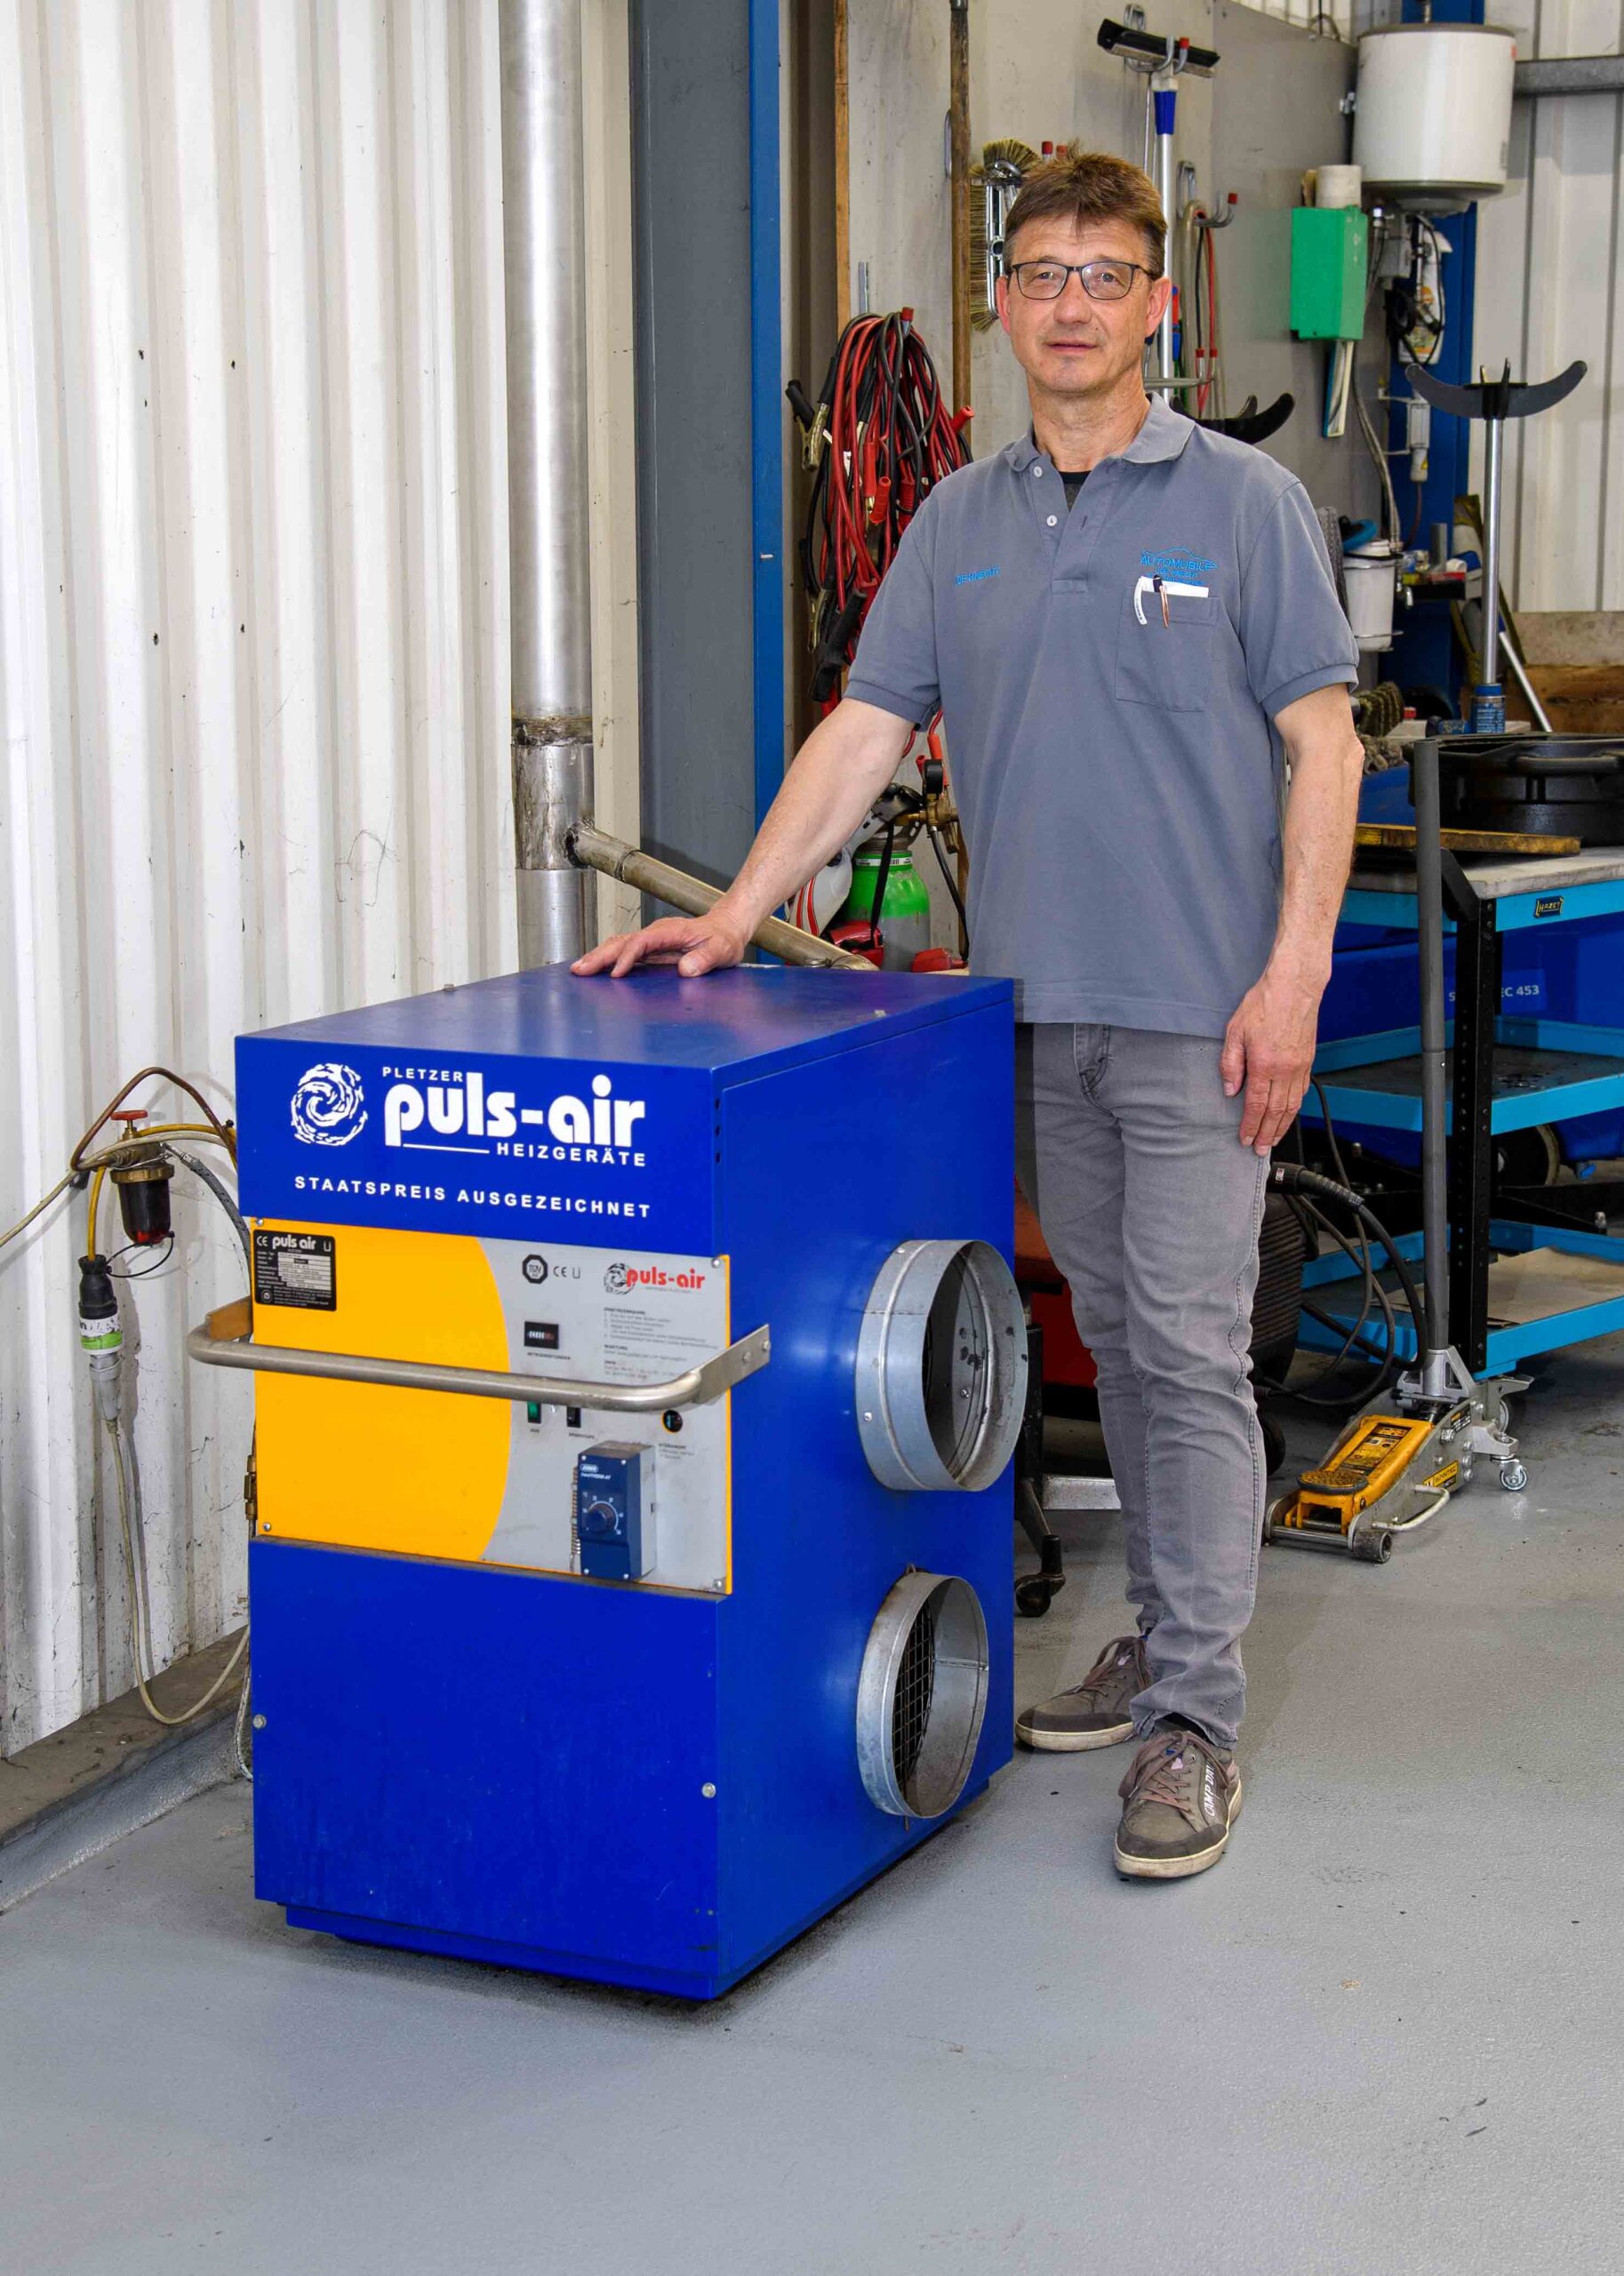 Joe Knecht with pulse-air workshop heating